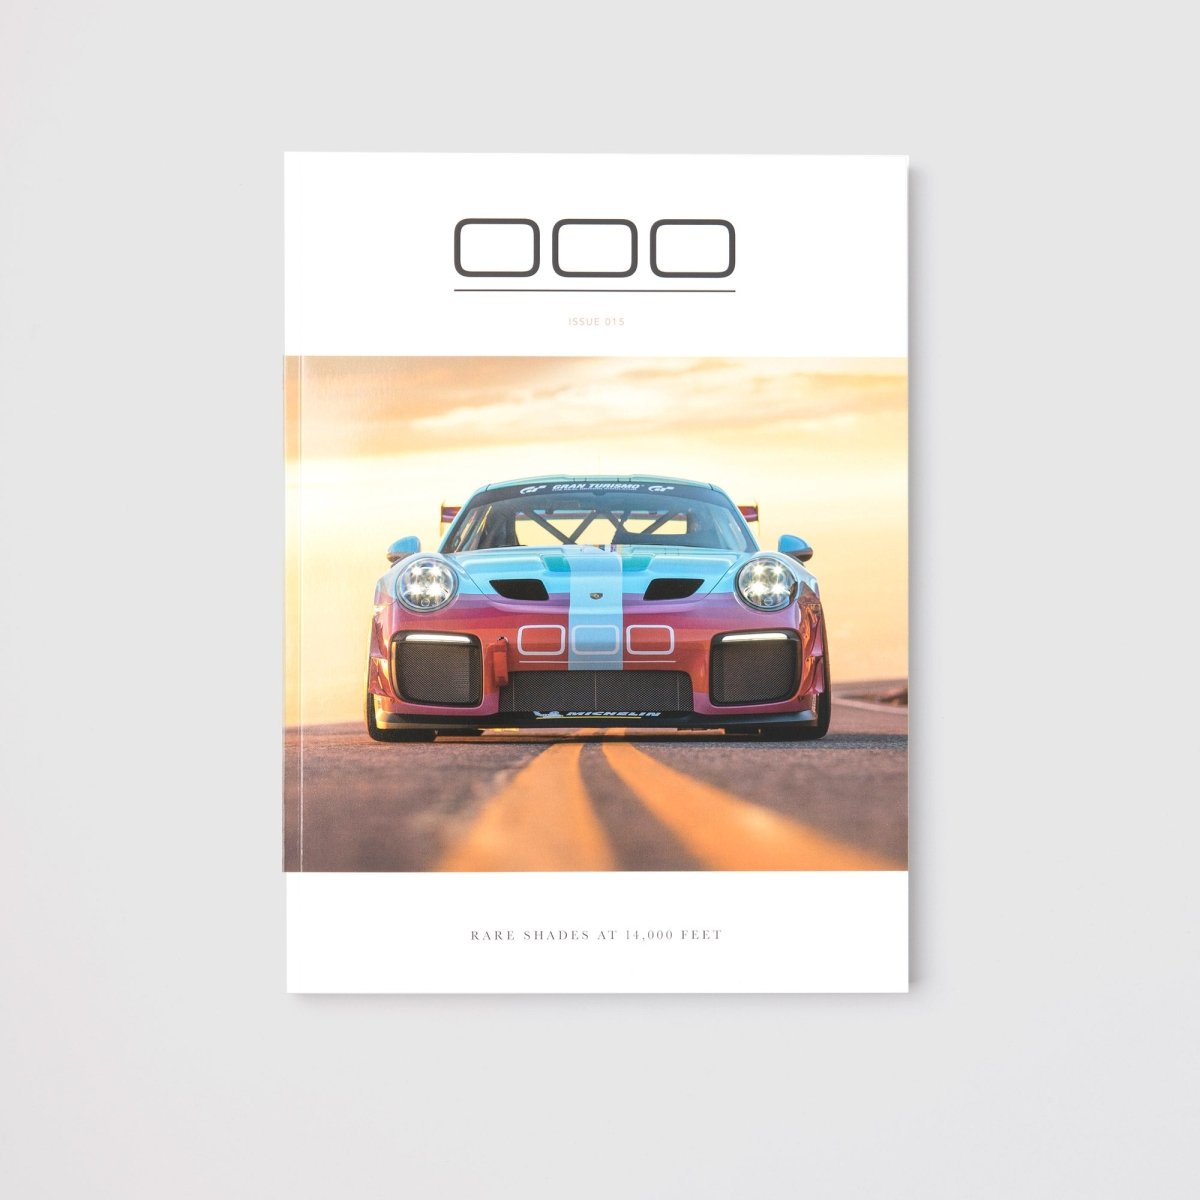 000 Magazine - Issue 015